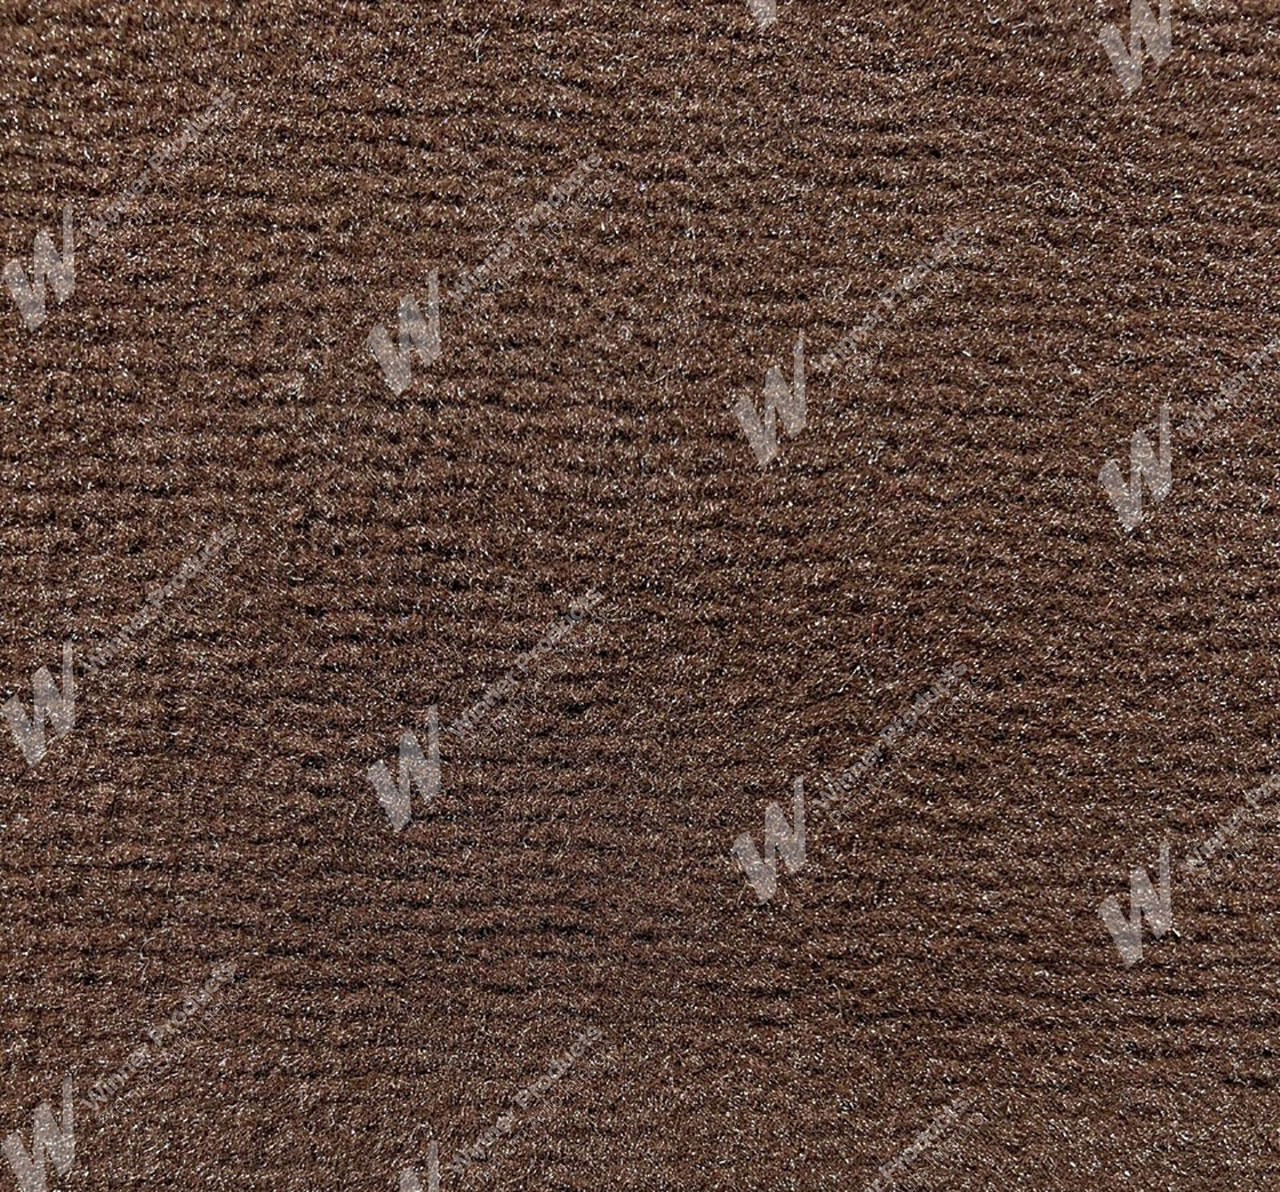 Holden Statesman HQ Statesman Deville 71-72 19N Antique Brown Carpet (Image 1 of 1)